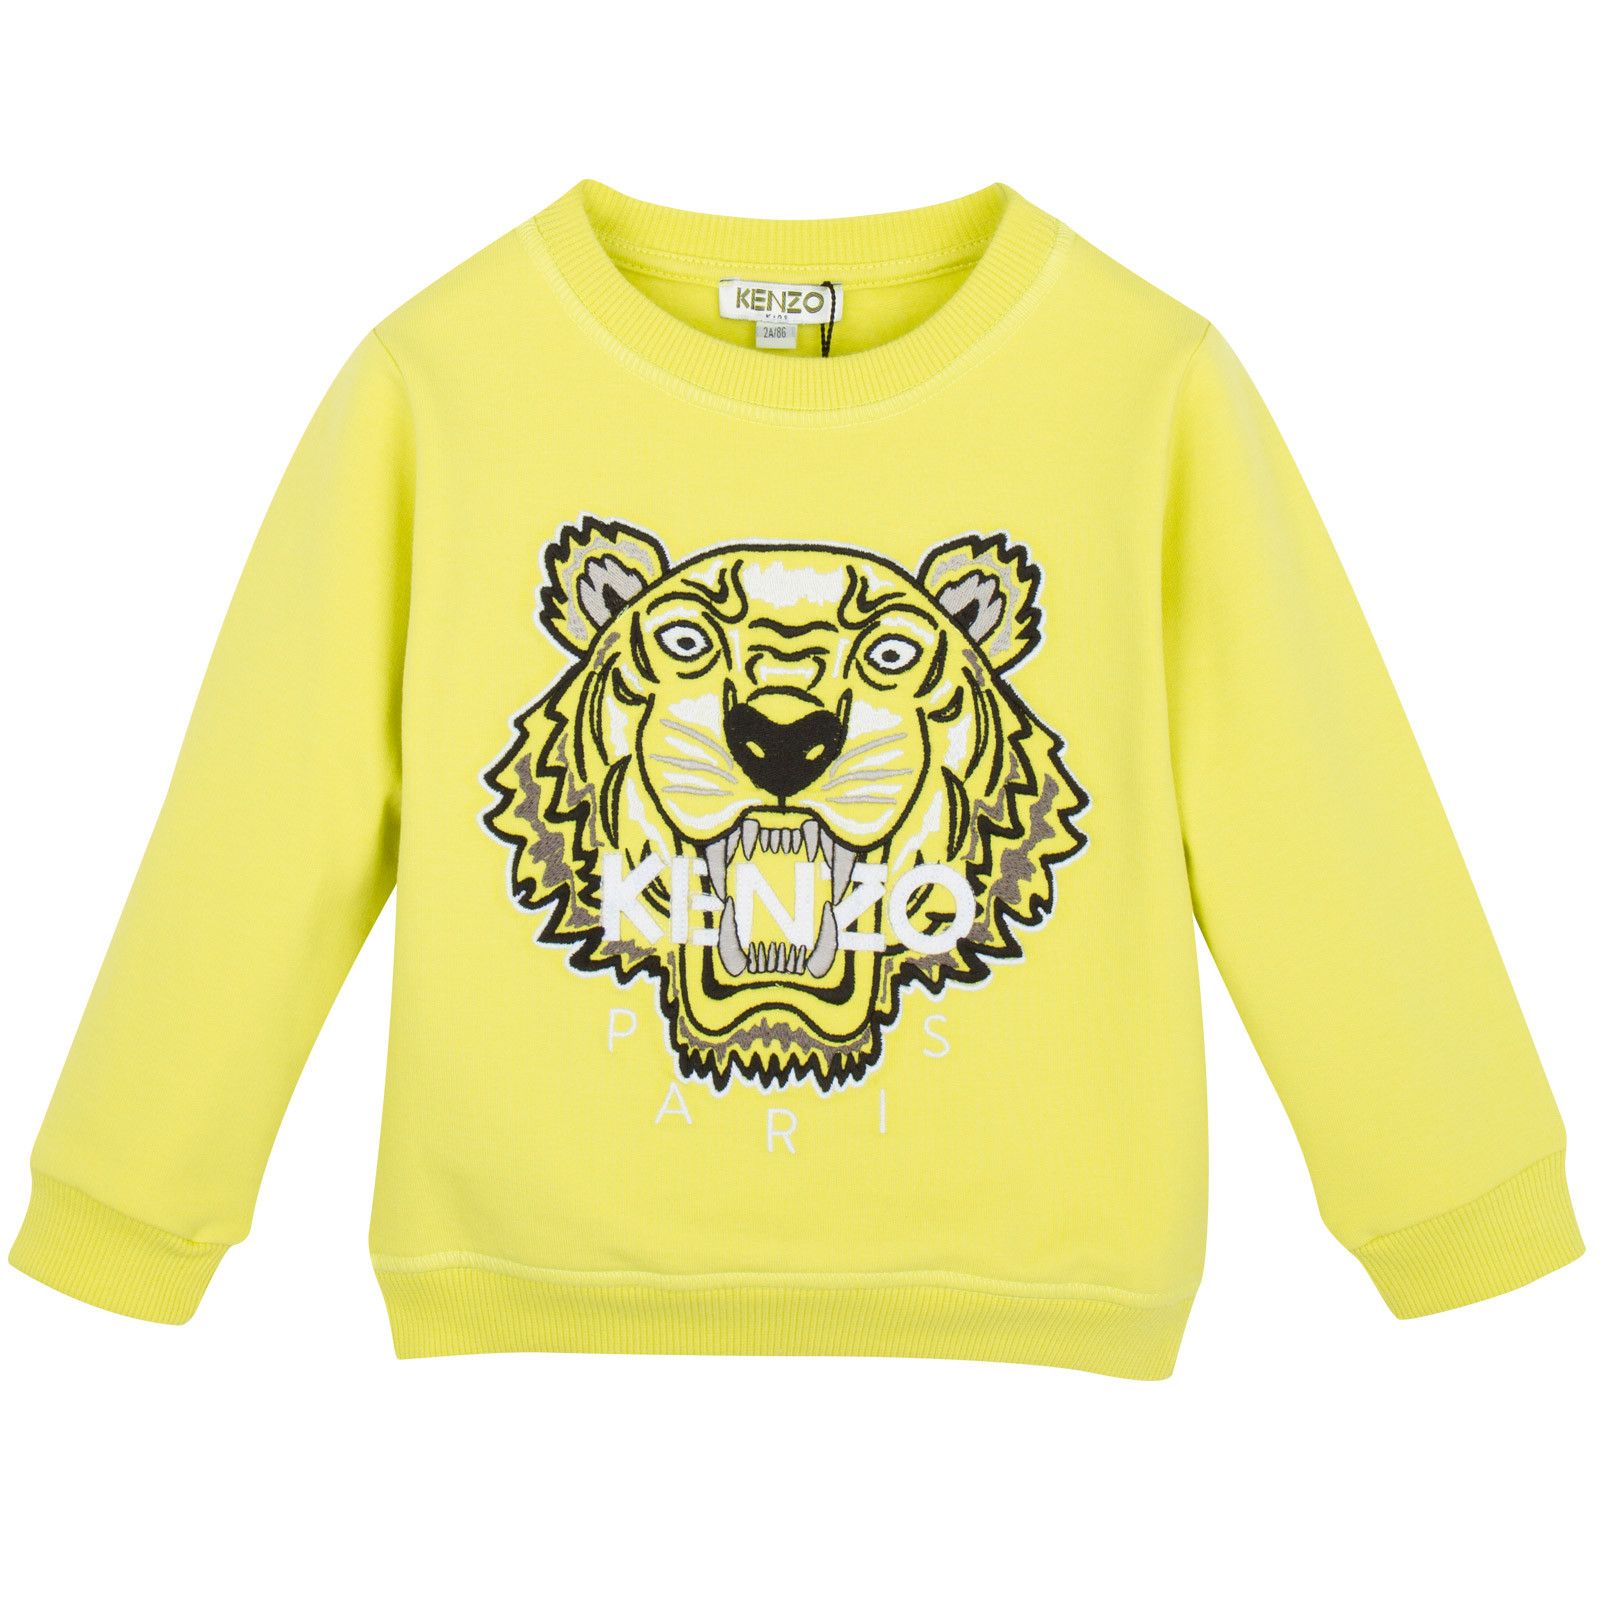 Boys Lime Green Tiger Embroidered Sweatshirt - CÉMAROSE | Children's Fashion Store - 1